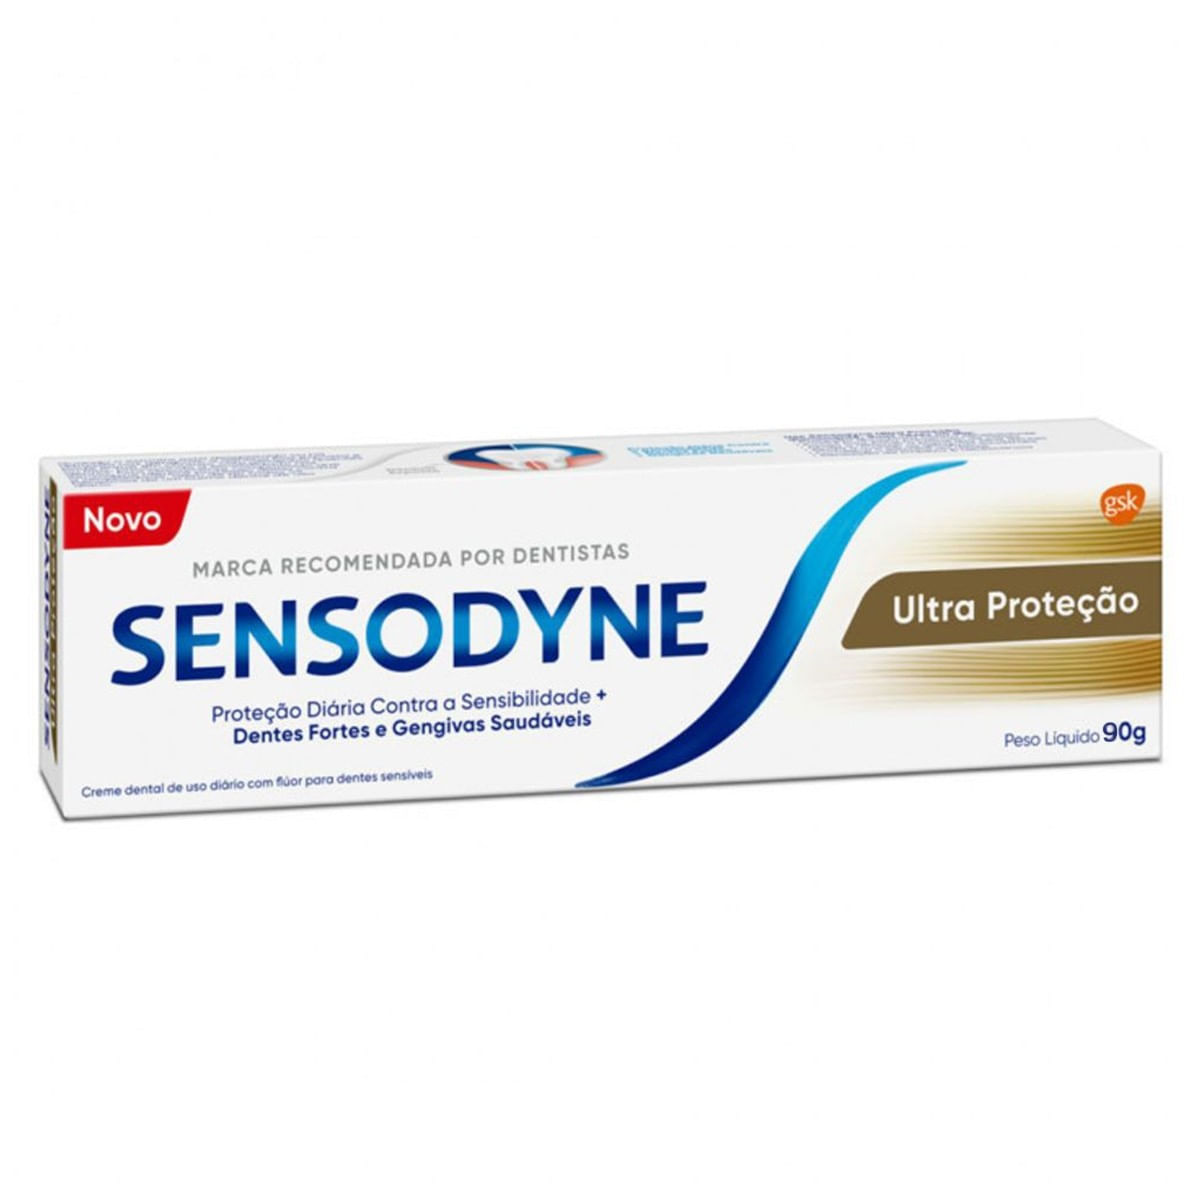 Sensodyne-Ultra-Protecao-Creme-Dental-90g